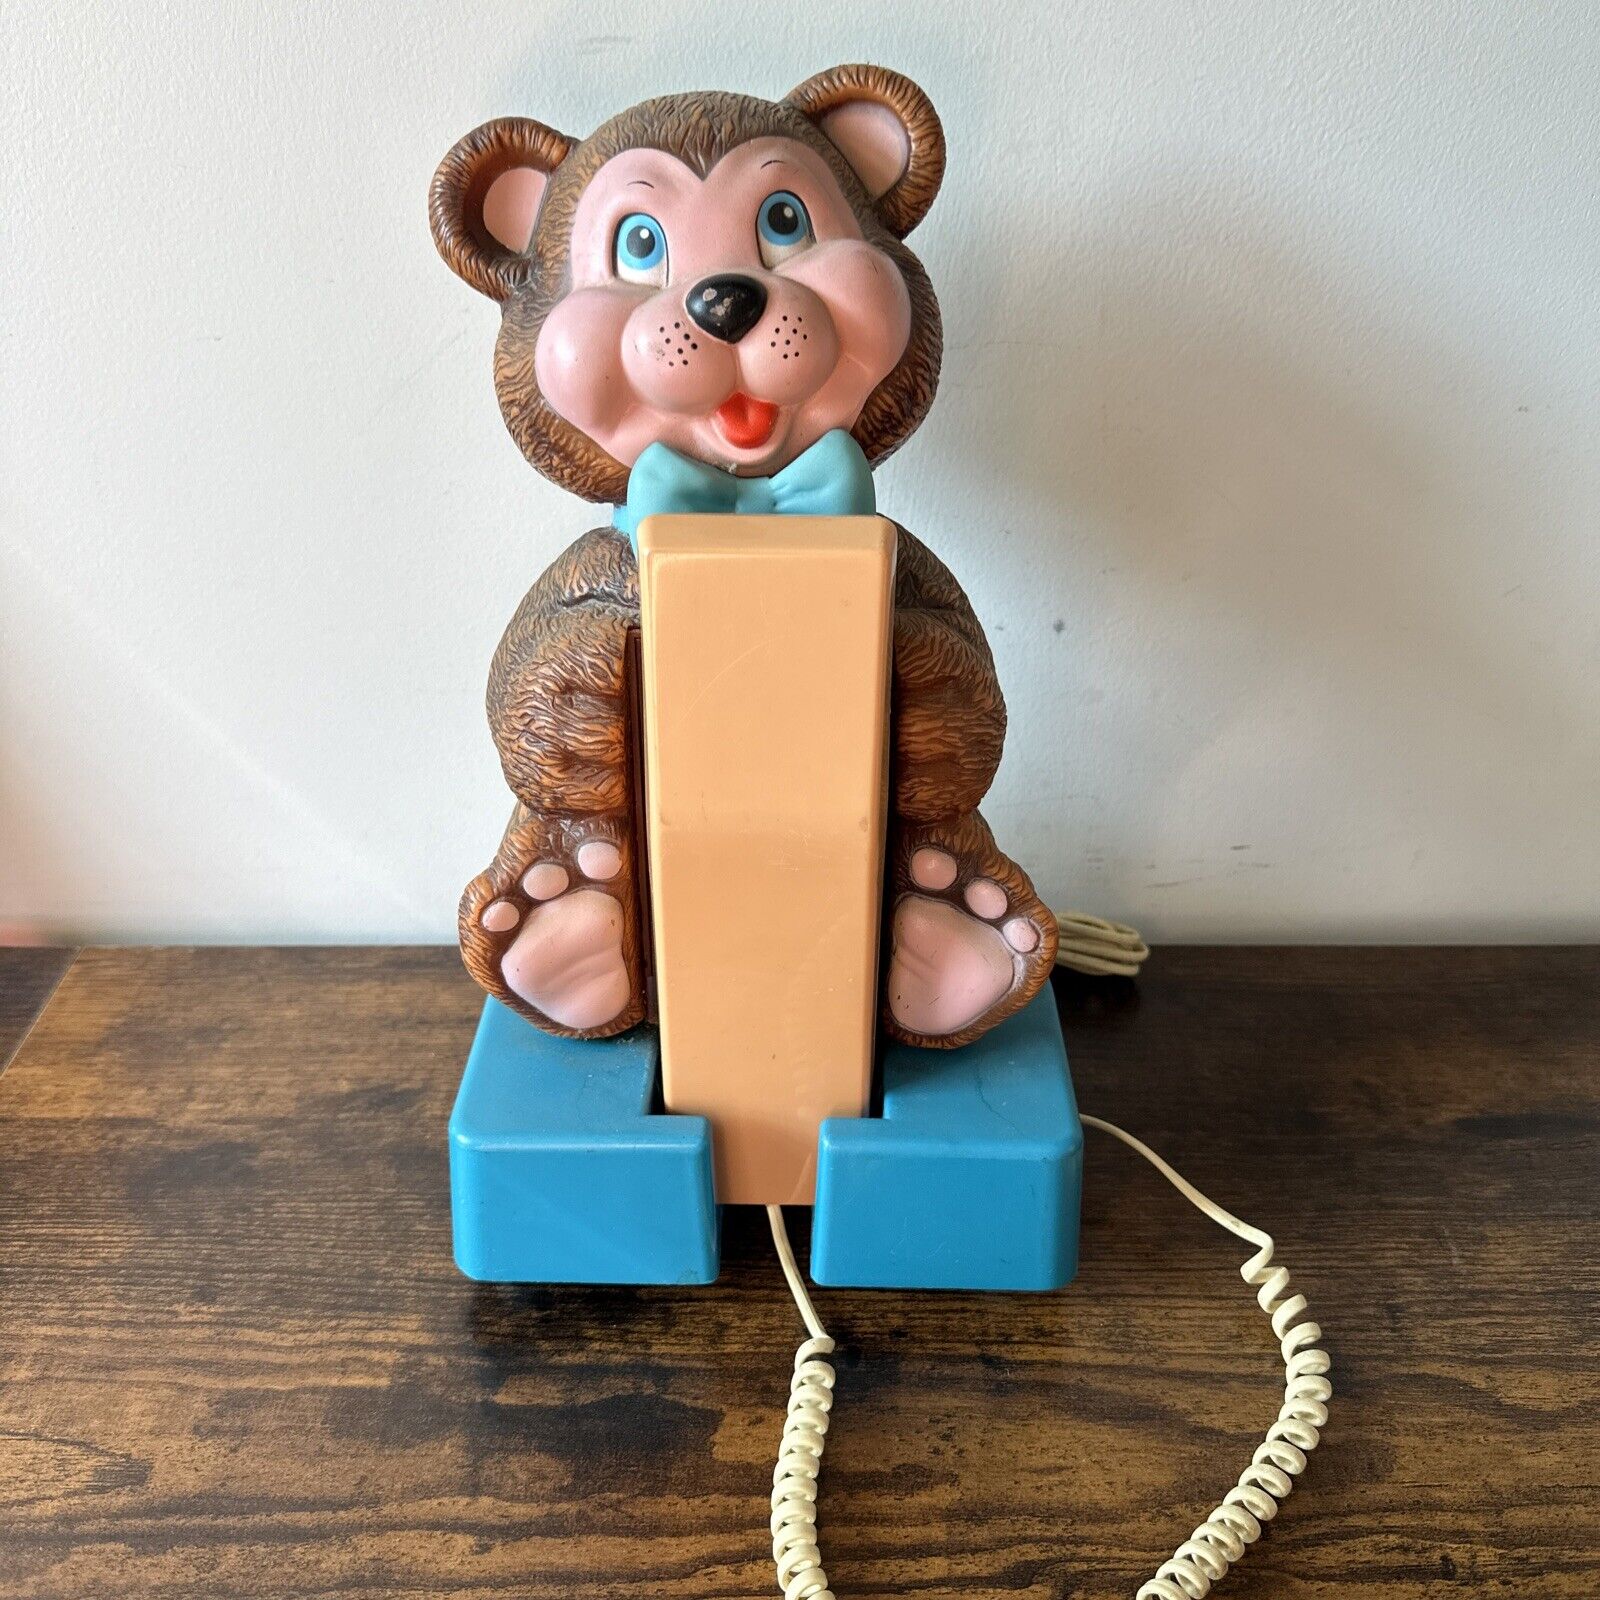 Vintage Teddy Bear Telephone Landline Carlton #7780 Pushbutton